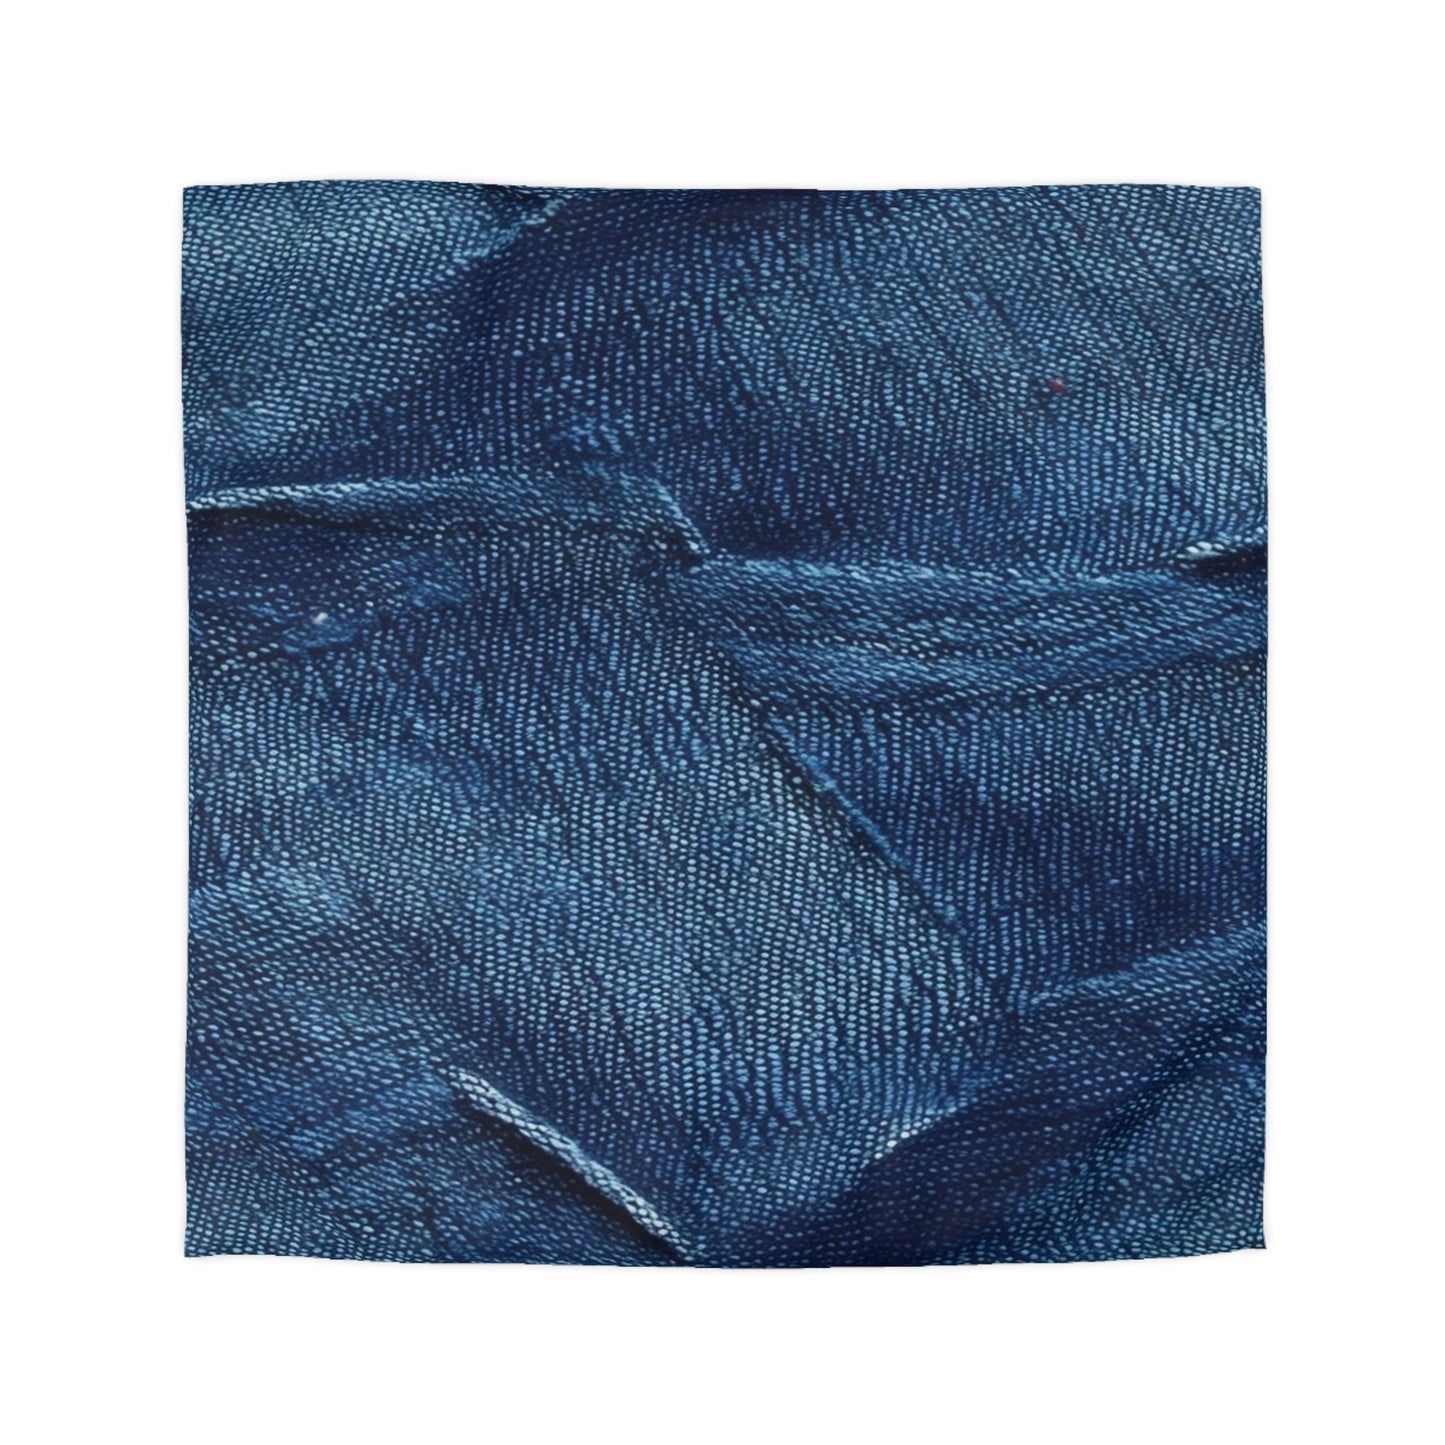 Dark Blue: Distressed Denim-Inspired Fabric Design - Microfiber Duvet Cover